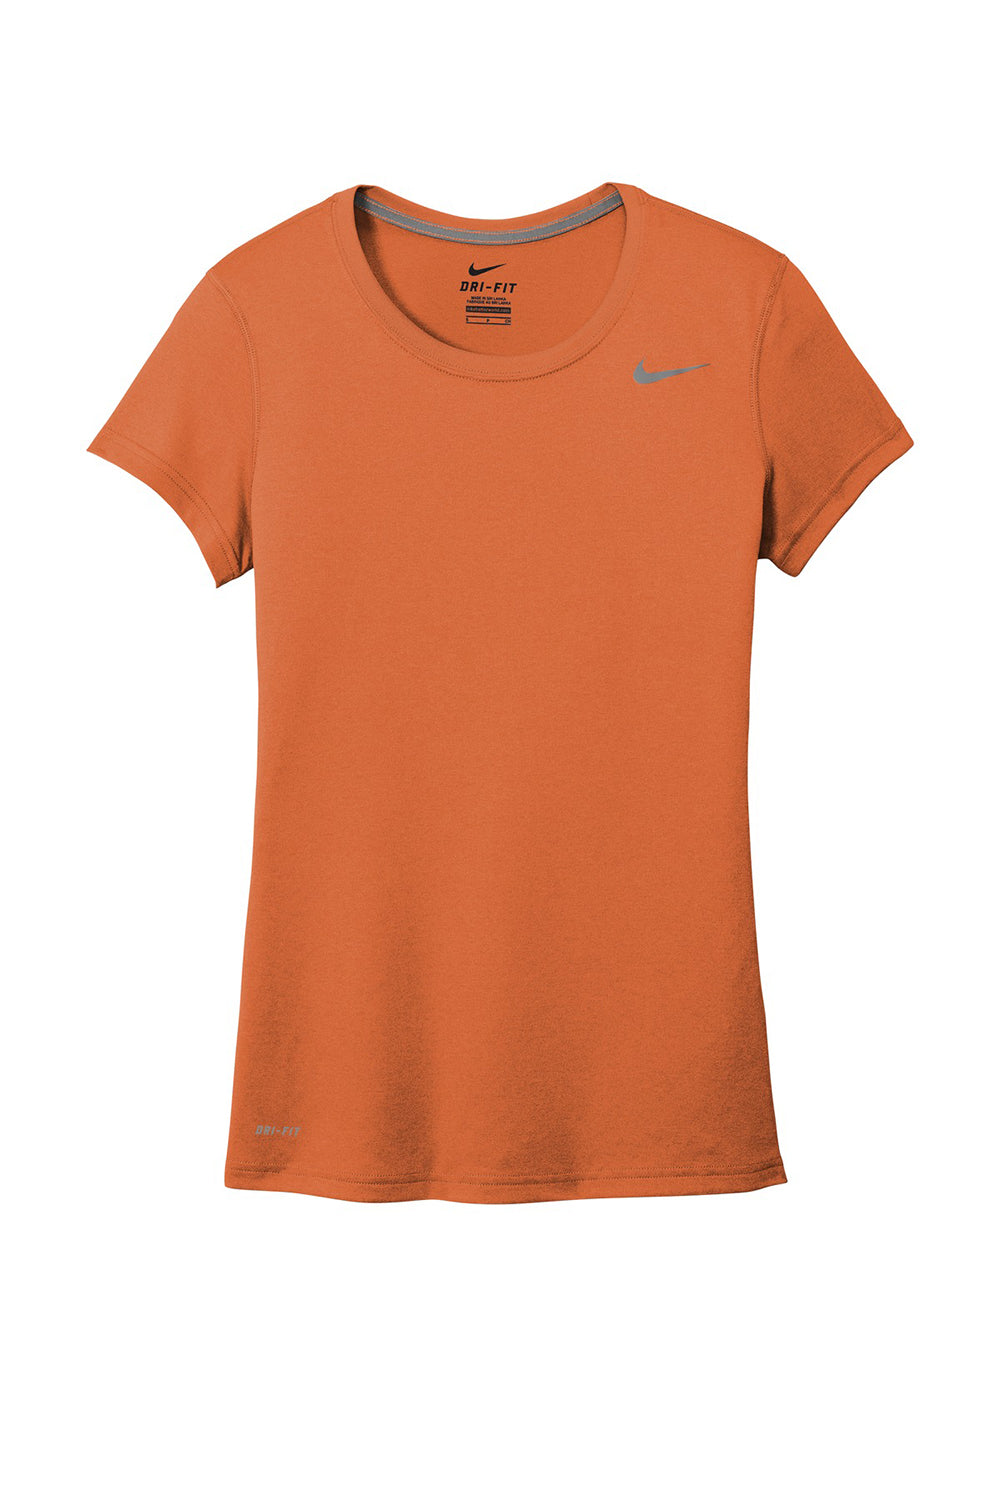 Nike CU7599 Womens Legend Dri-Fit Moisture Wicking Short Sleeve Crewneck T-Shirt Desert Orange Flat Front